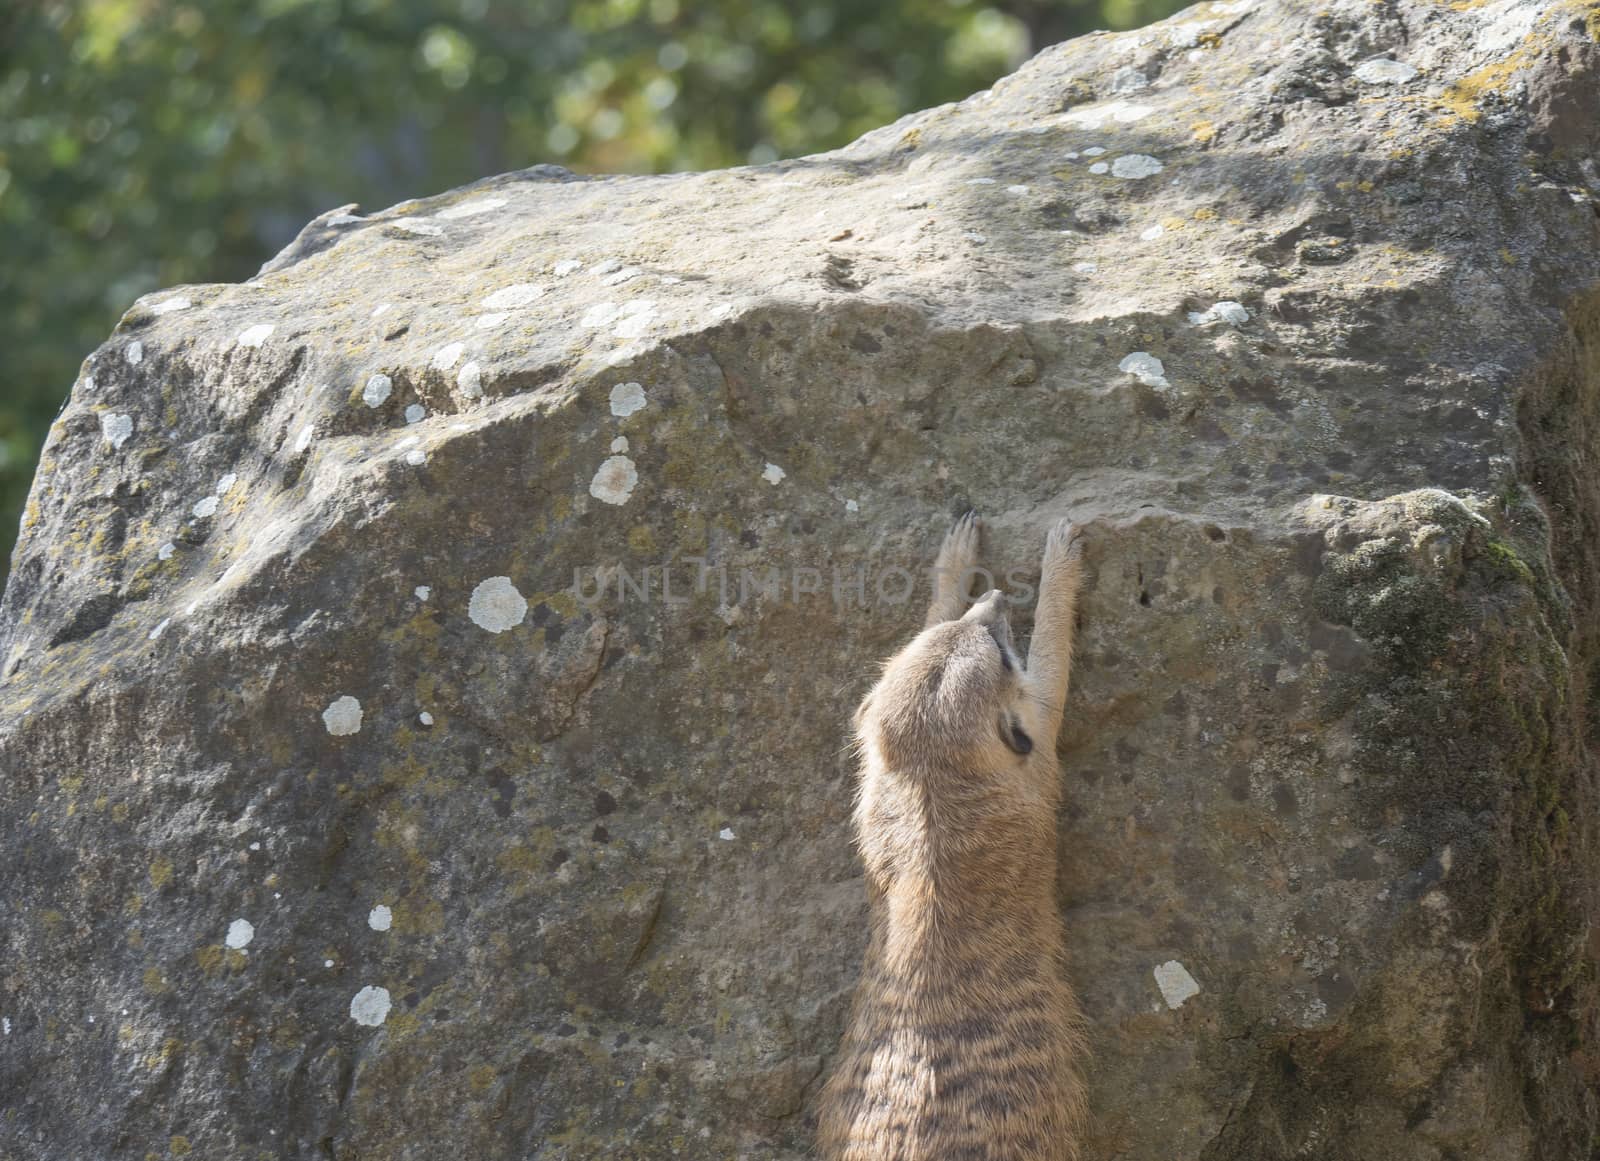 Meerkat or suricate, Suricata suricatta climbing on the roxk stone, selective focus, copy space for text.